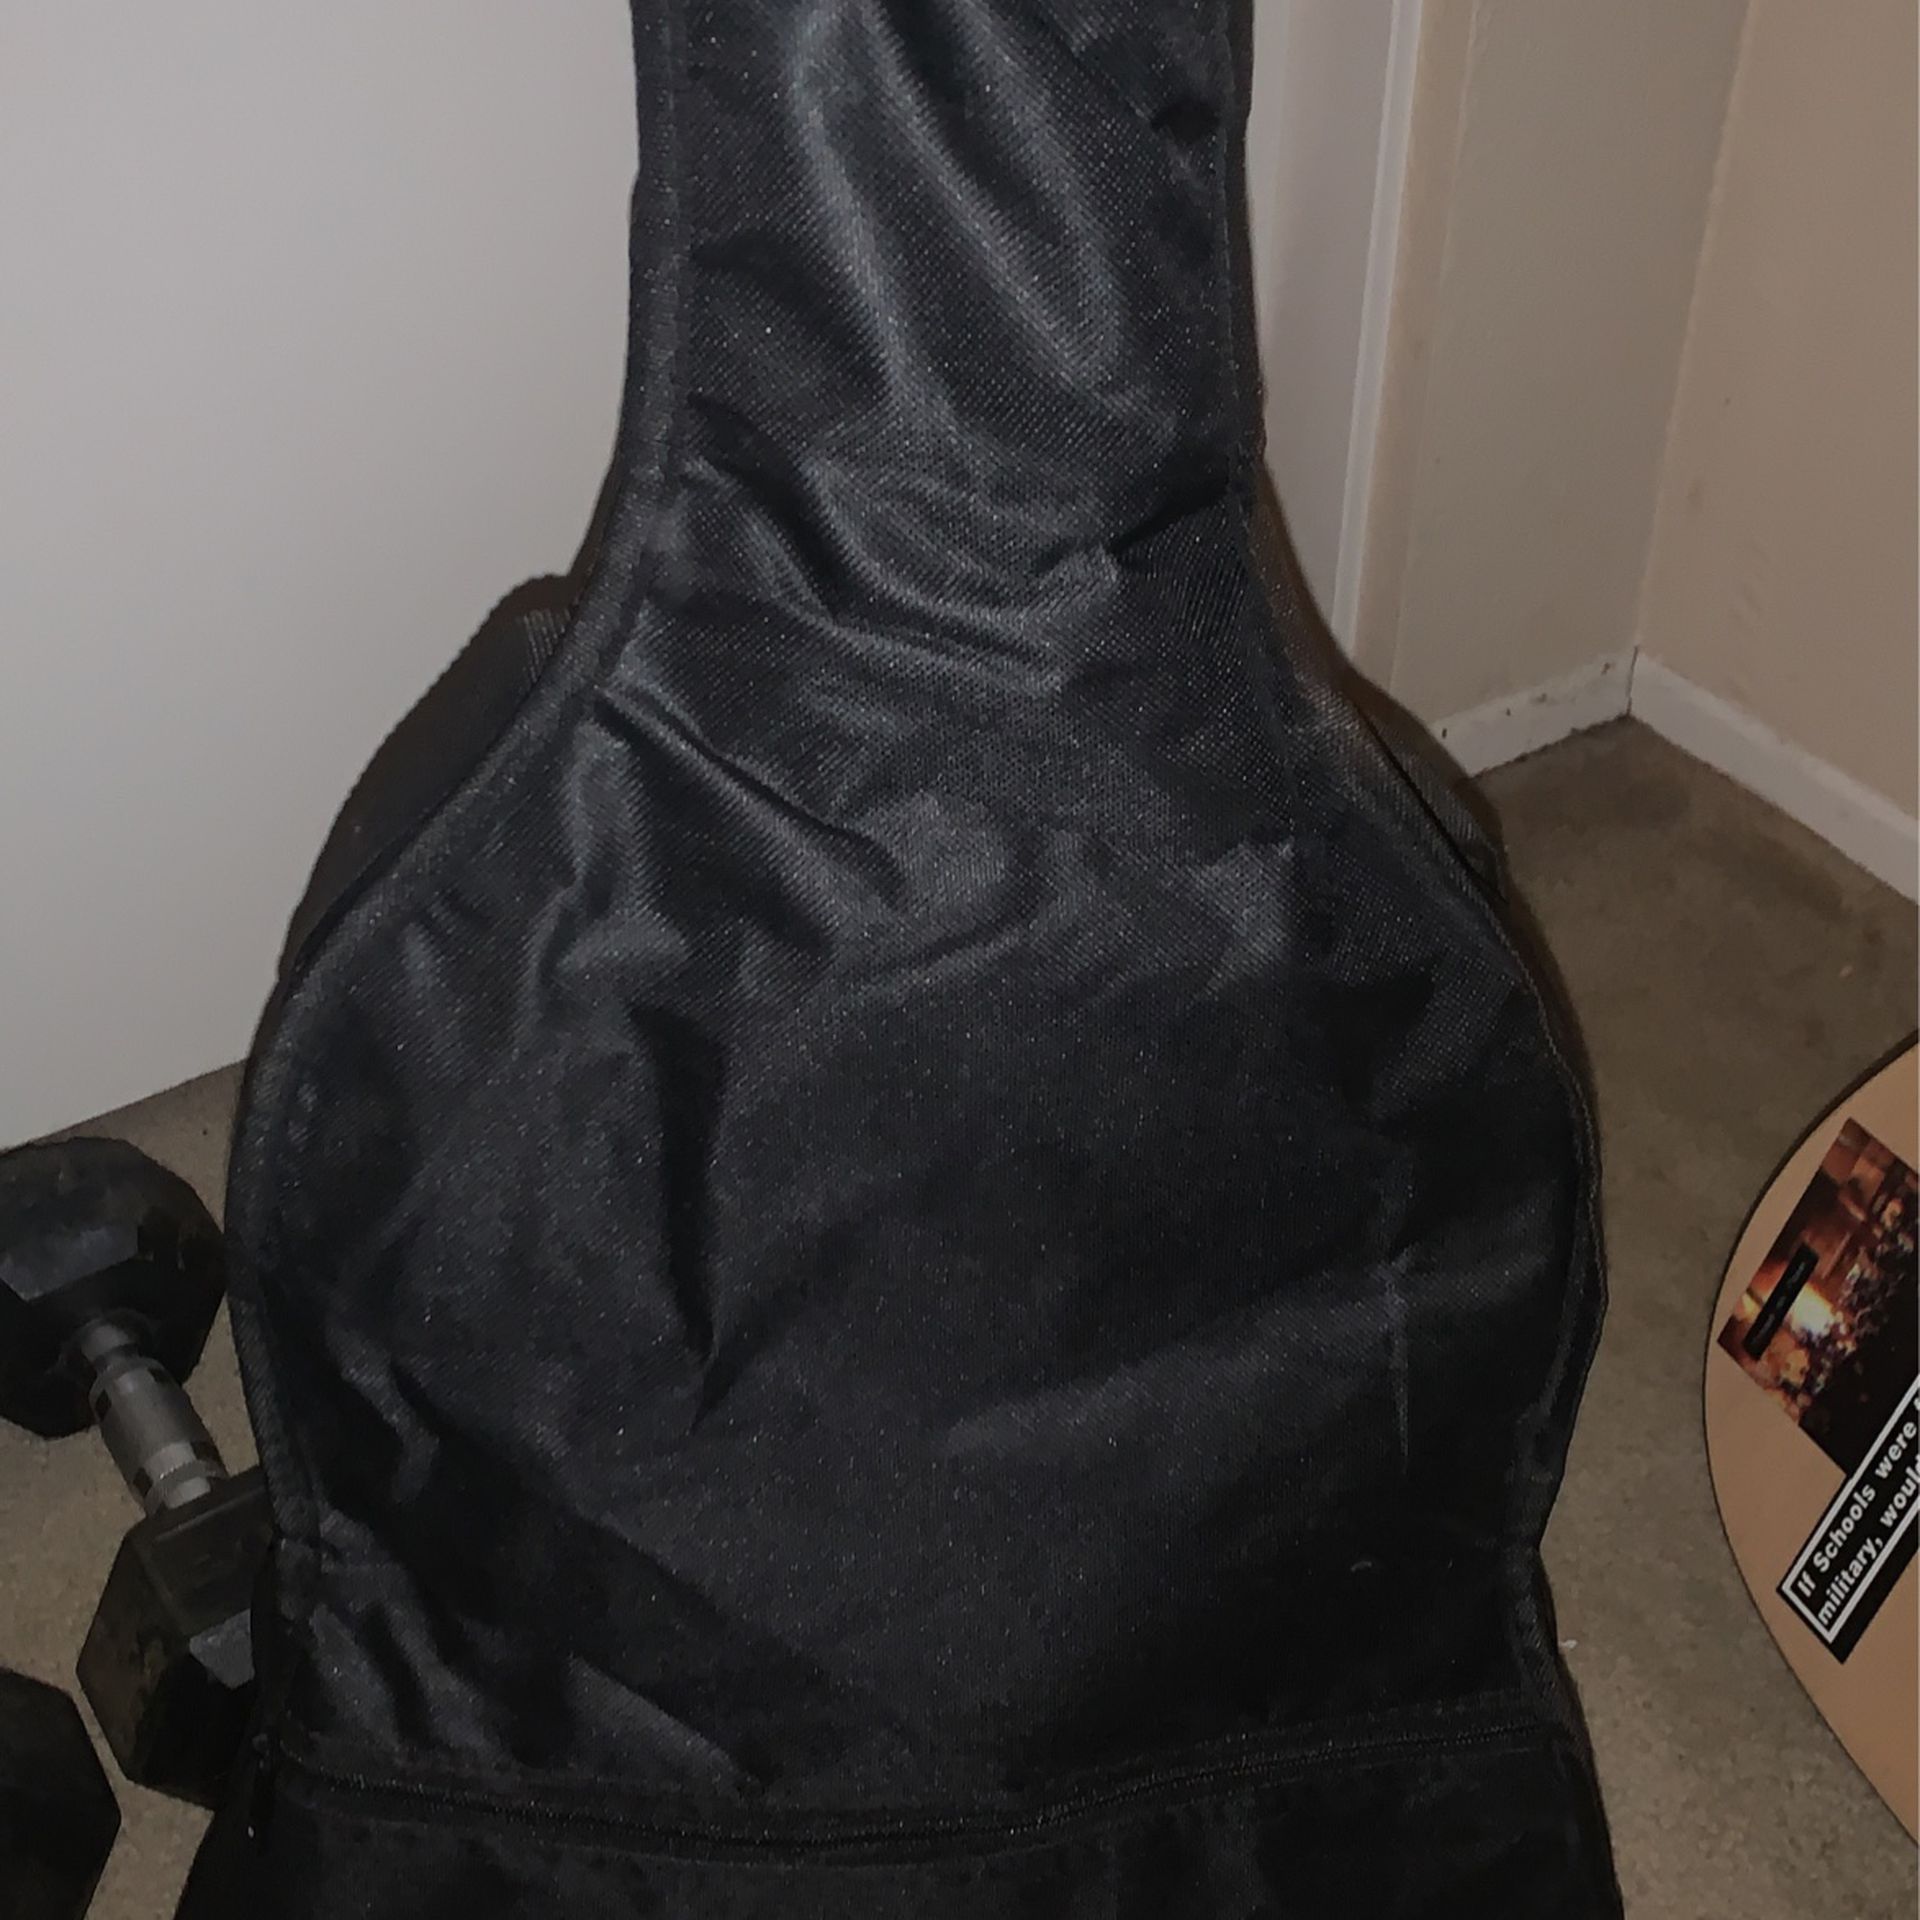 Classical Guitar And Guitar Carrying Bag